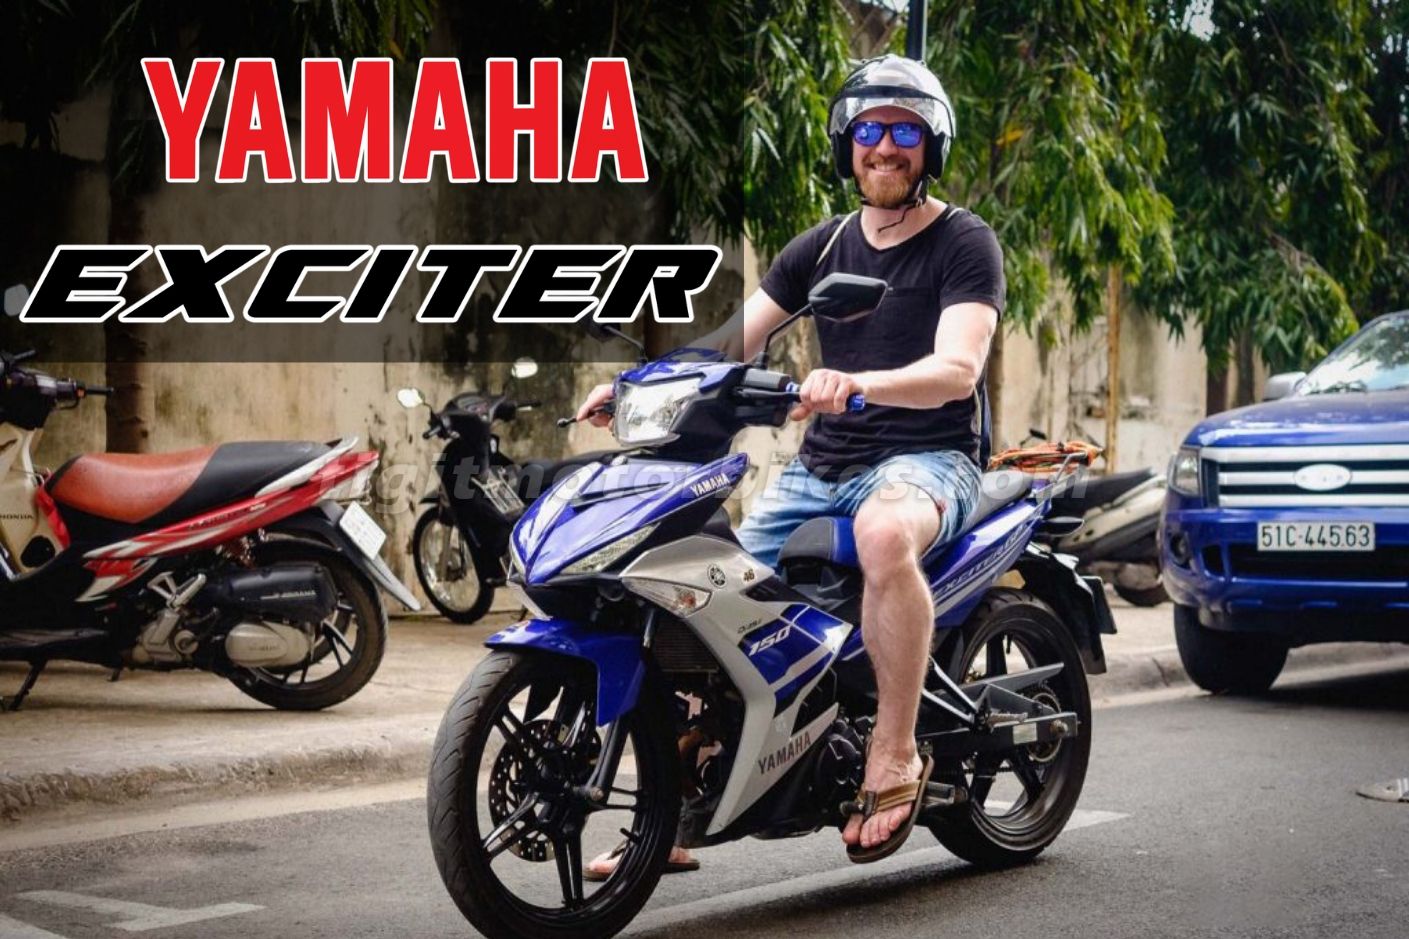 Yamaha Exciter 150cc - Tour Vietnam With Quality Motorbike Rentals